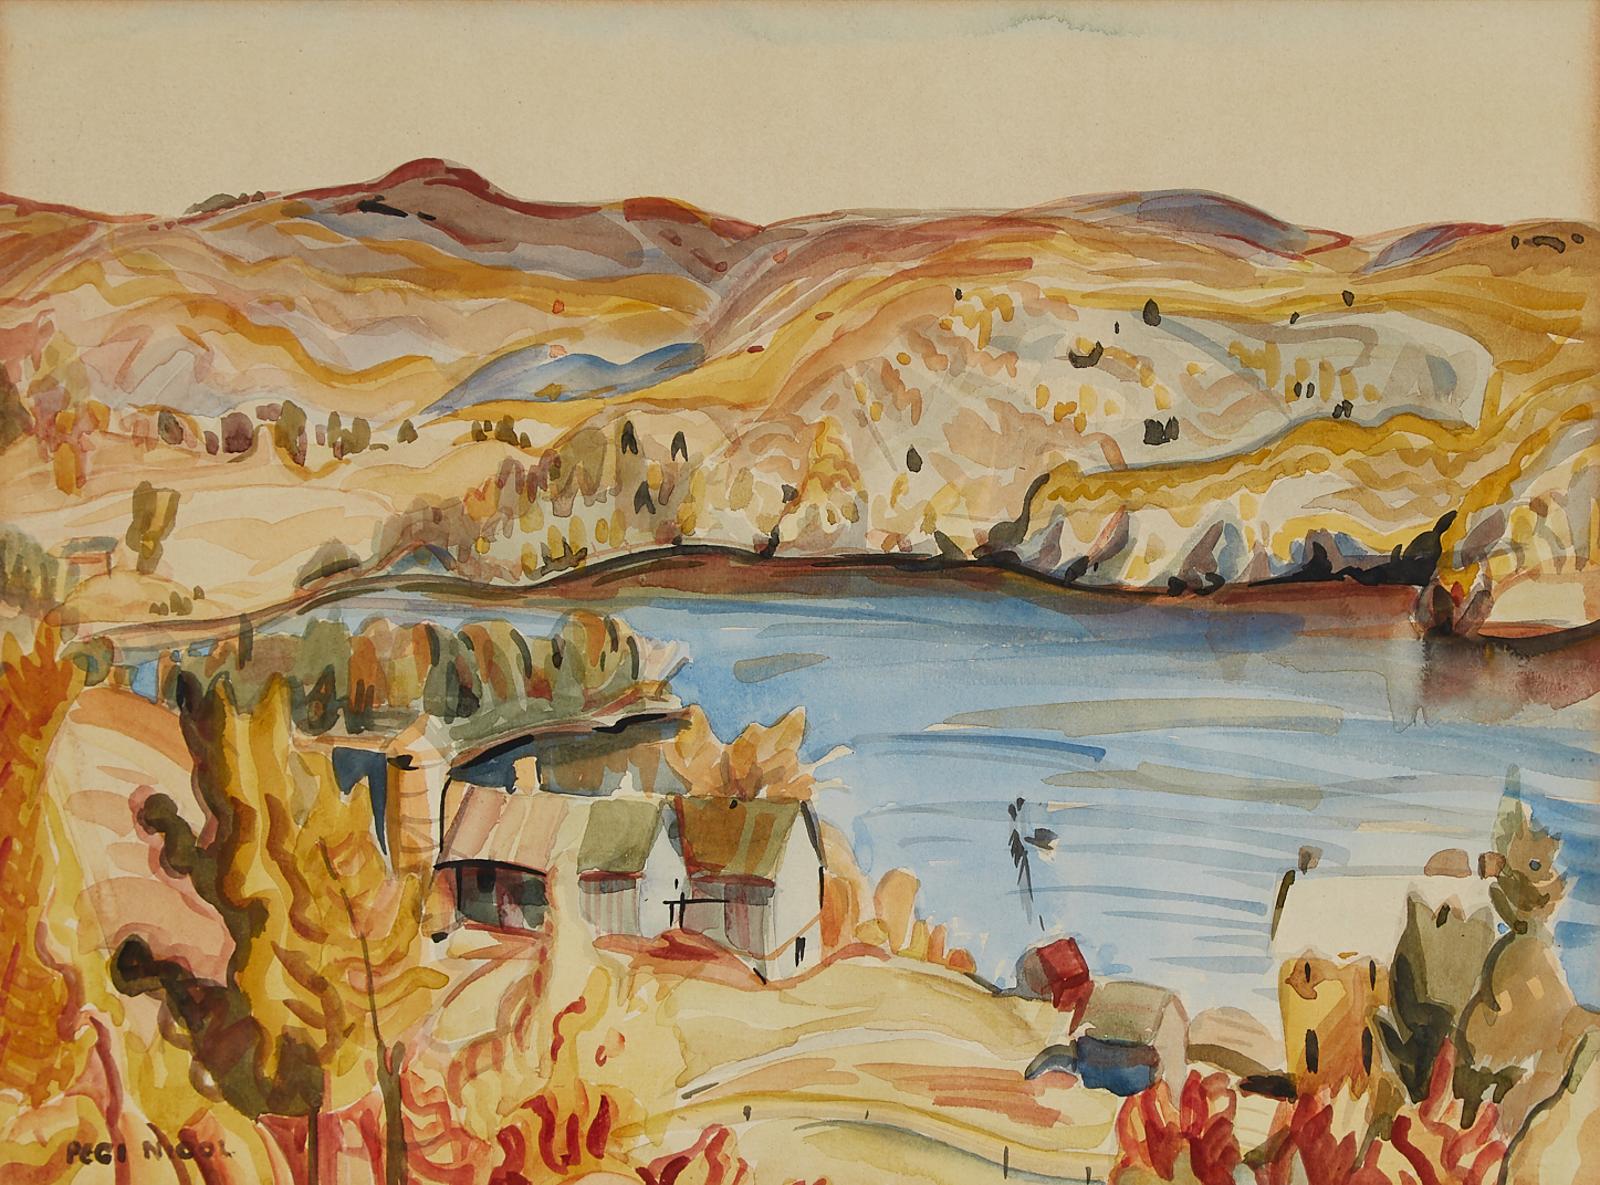 Pegi Margaret Kathleen Nicol MacLeod (1904-1949) - On The Gatineau River (North Of Ottawa)